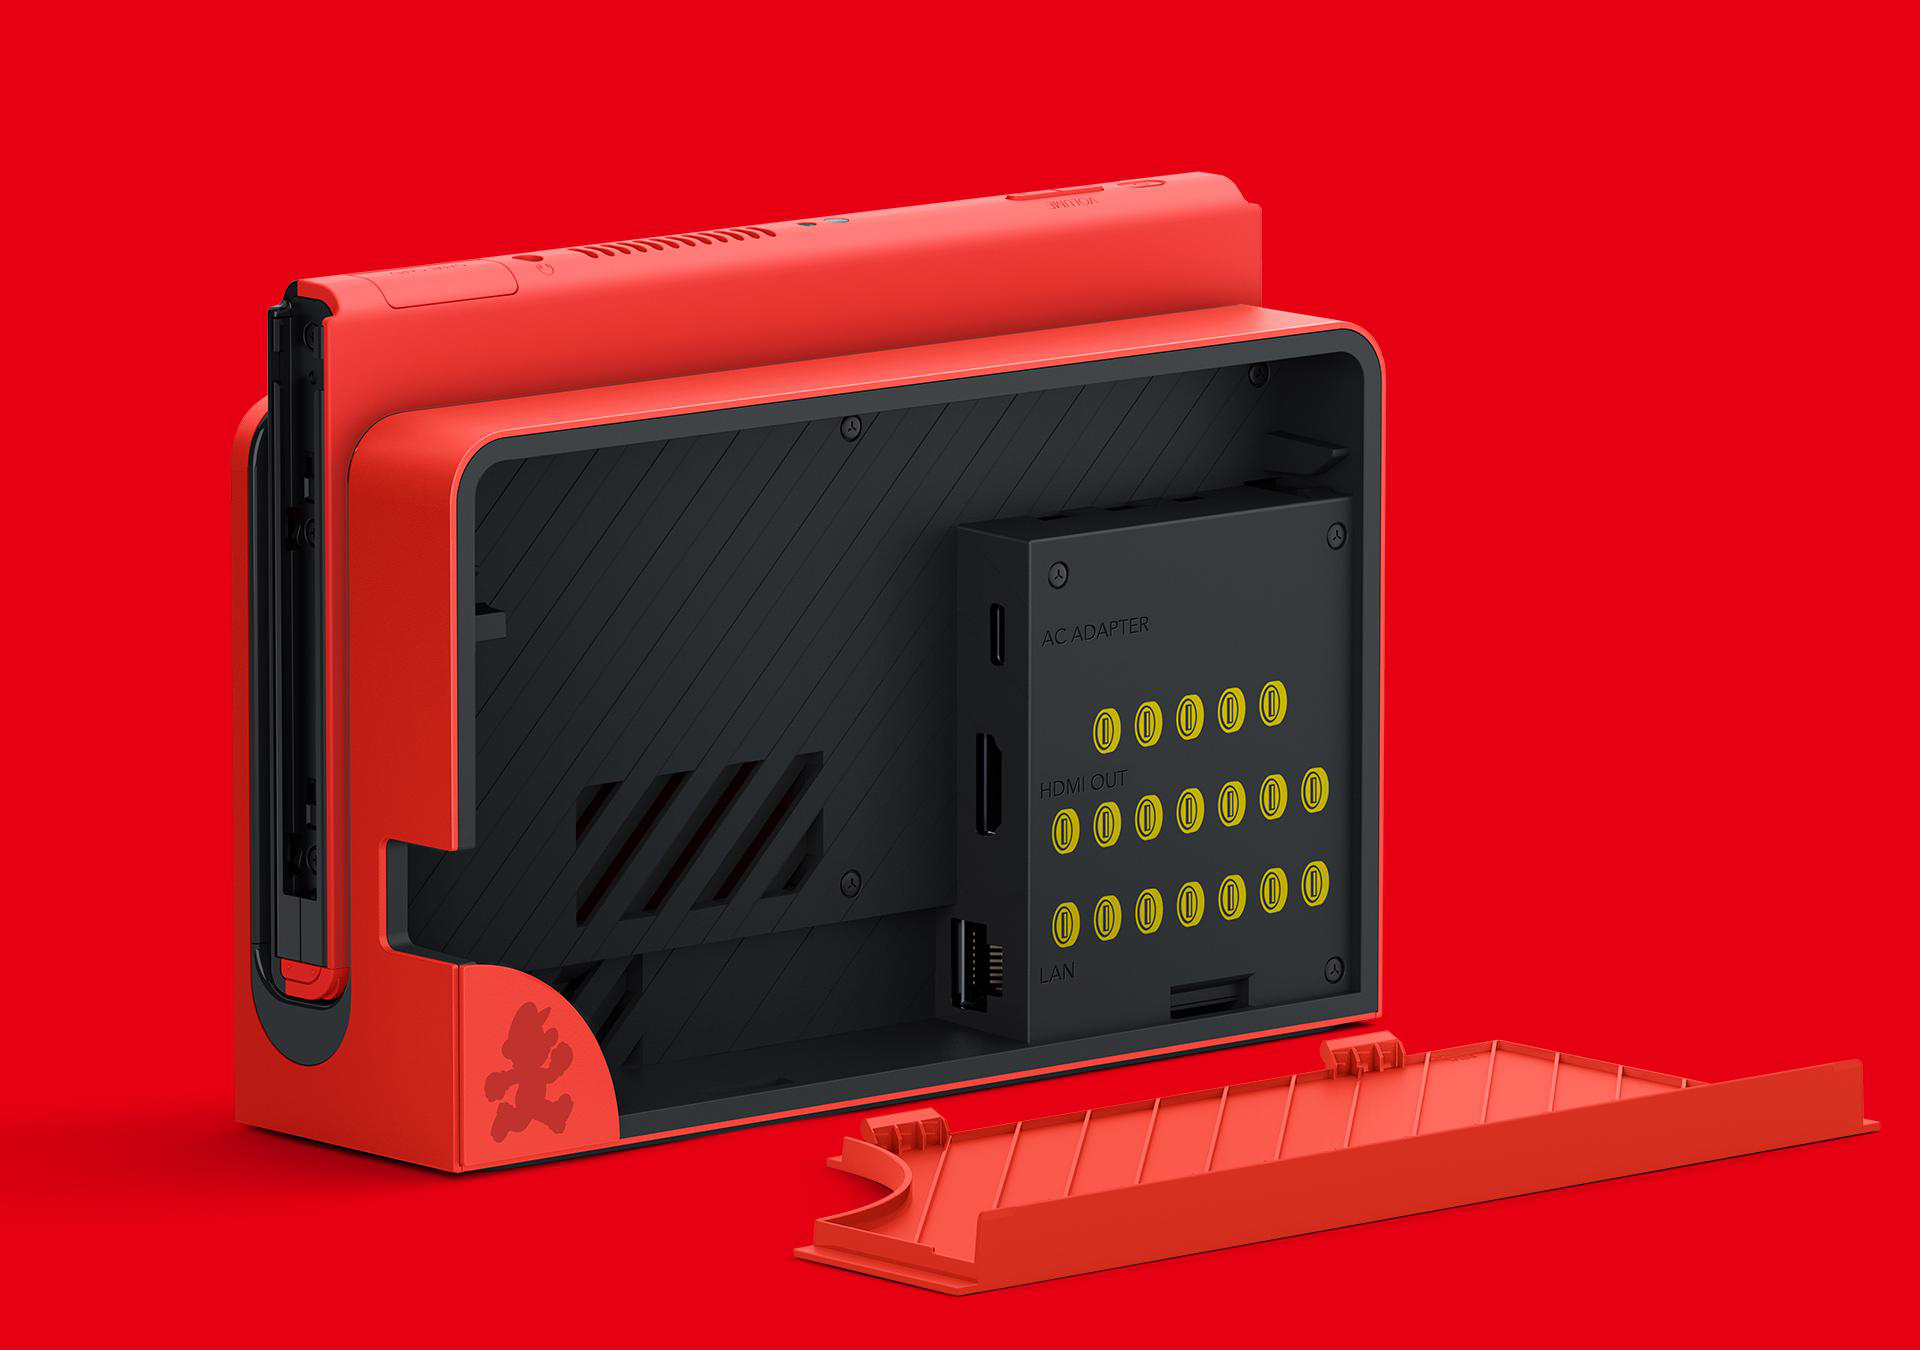 NINTENDO (rot) OLED Modell Mario-Edition Switch